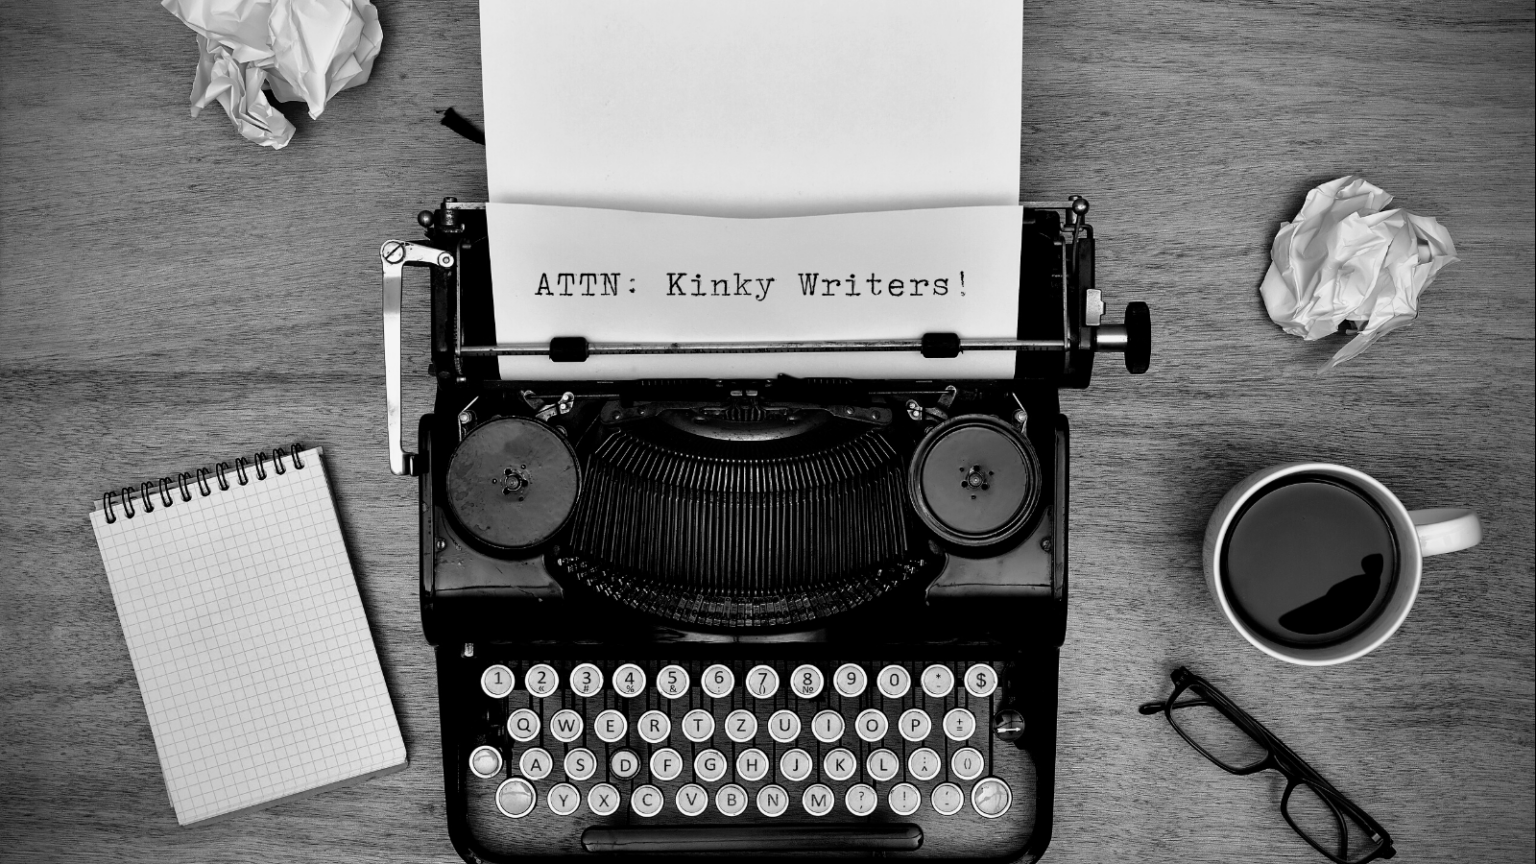 Typewriter that says "ATTN: Kinky Writers!"